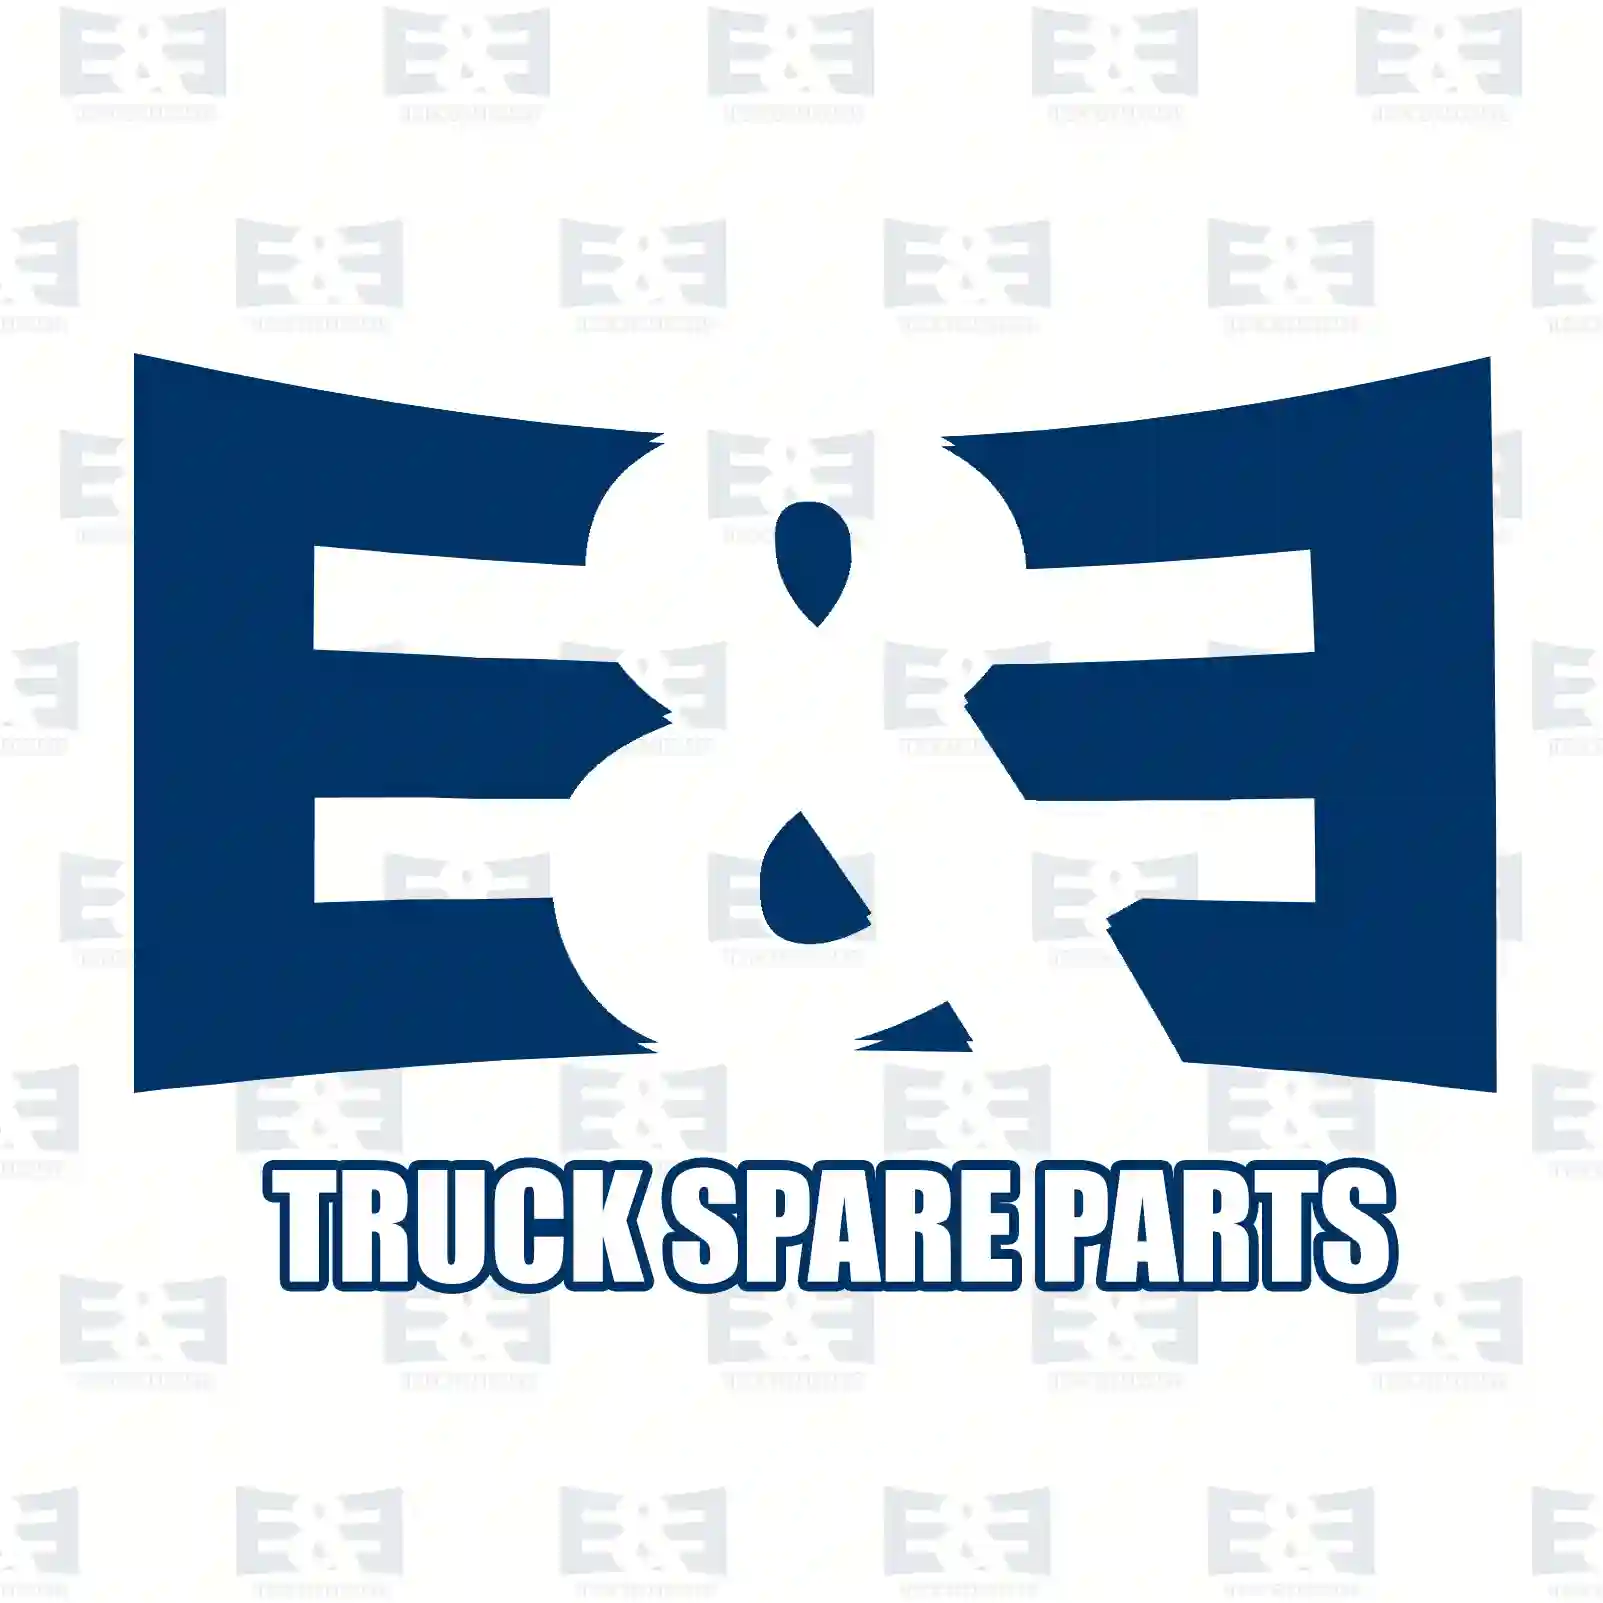 4-circuit-protection valve, 2E2296887, 64521516001, 81521516095, 81521516098, 81521516099, 81521516105, 81521516106, 81521519095, 81525156105, 2V5607359, ZG50041-0008 ||  2E2296887 E&E Truck Spare Parts | Truck Spare Parts, Auotomotive Spare Parts 4-circuit-protection valve, 2E2296887, 64521516001, 81521516095, 81521516098, 81521516099, 81521516105, 81521516106, 81521519095, 81525156105, 2V5607359, ZG50041-0008 ||  2E2296887 E&E Truck Spare Parts | Truck Spare Parts, Auotomotive Spare Parts